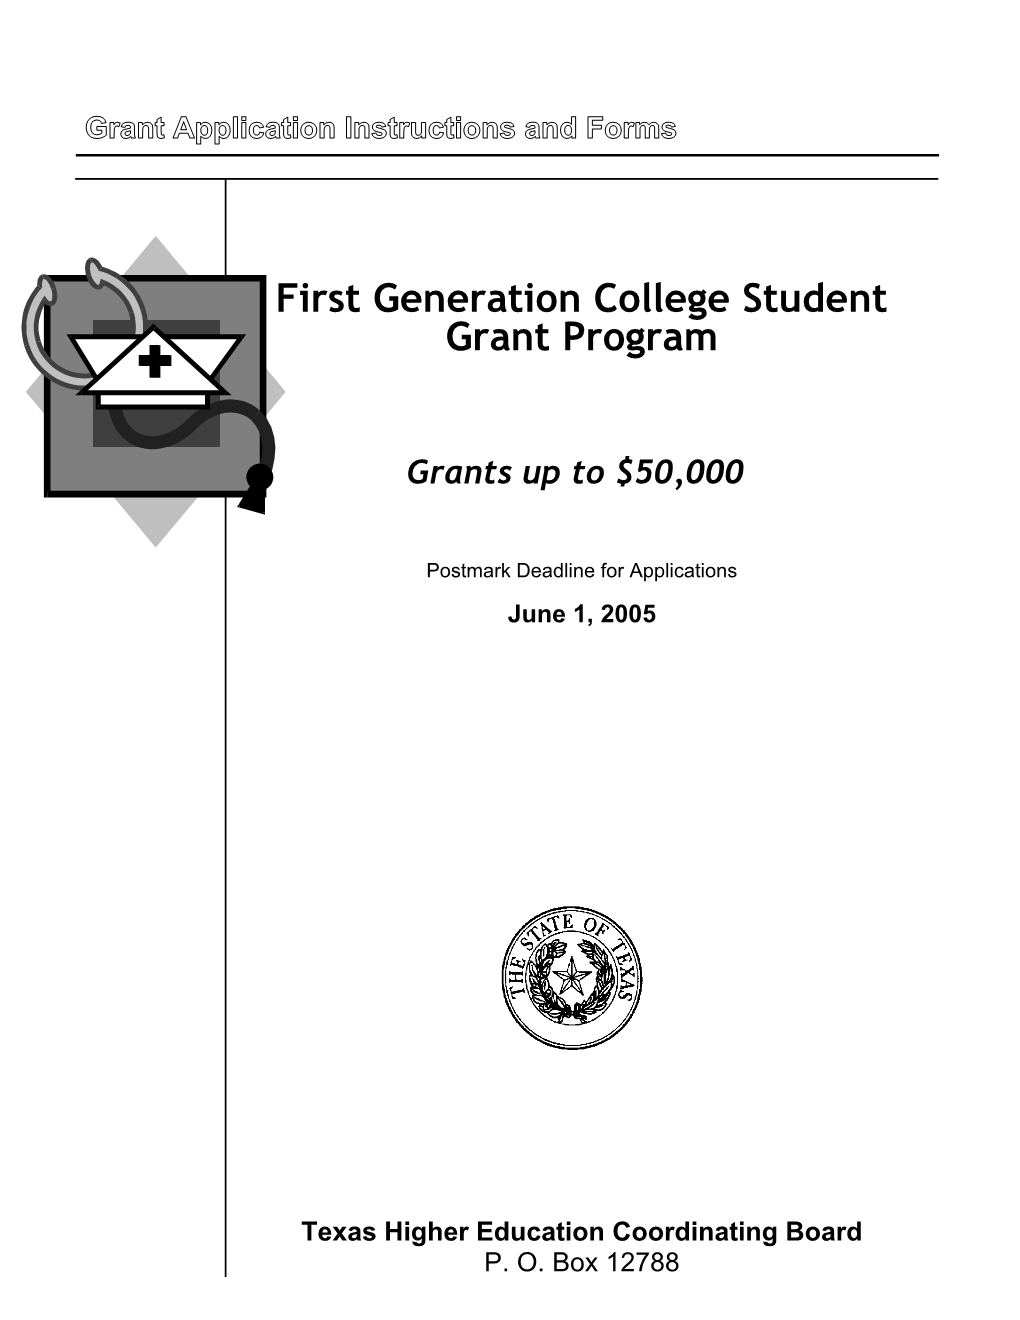 First Generation College Student Grant Program - Program Description and Instructions